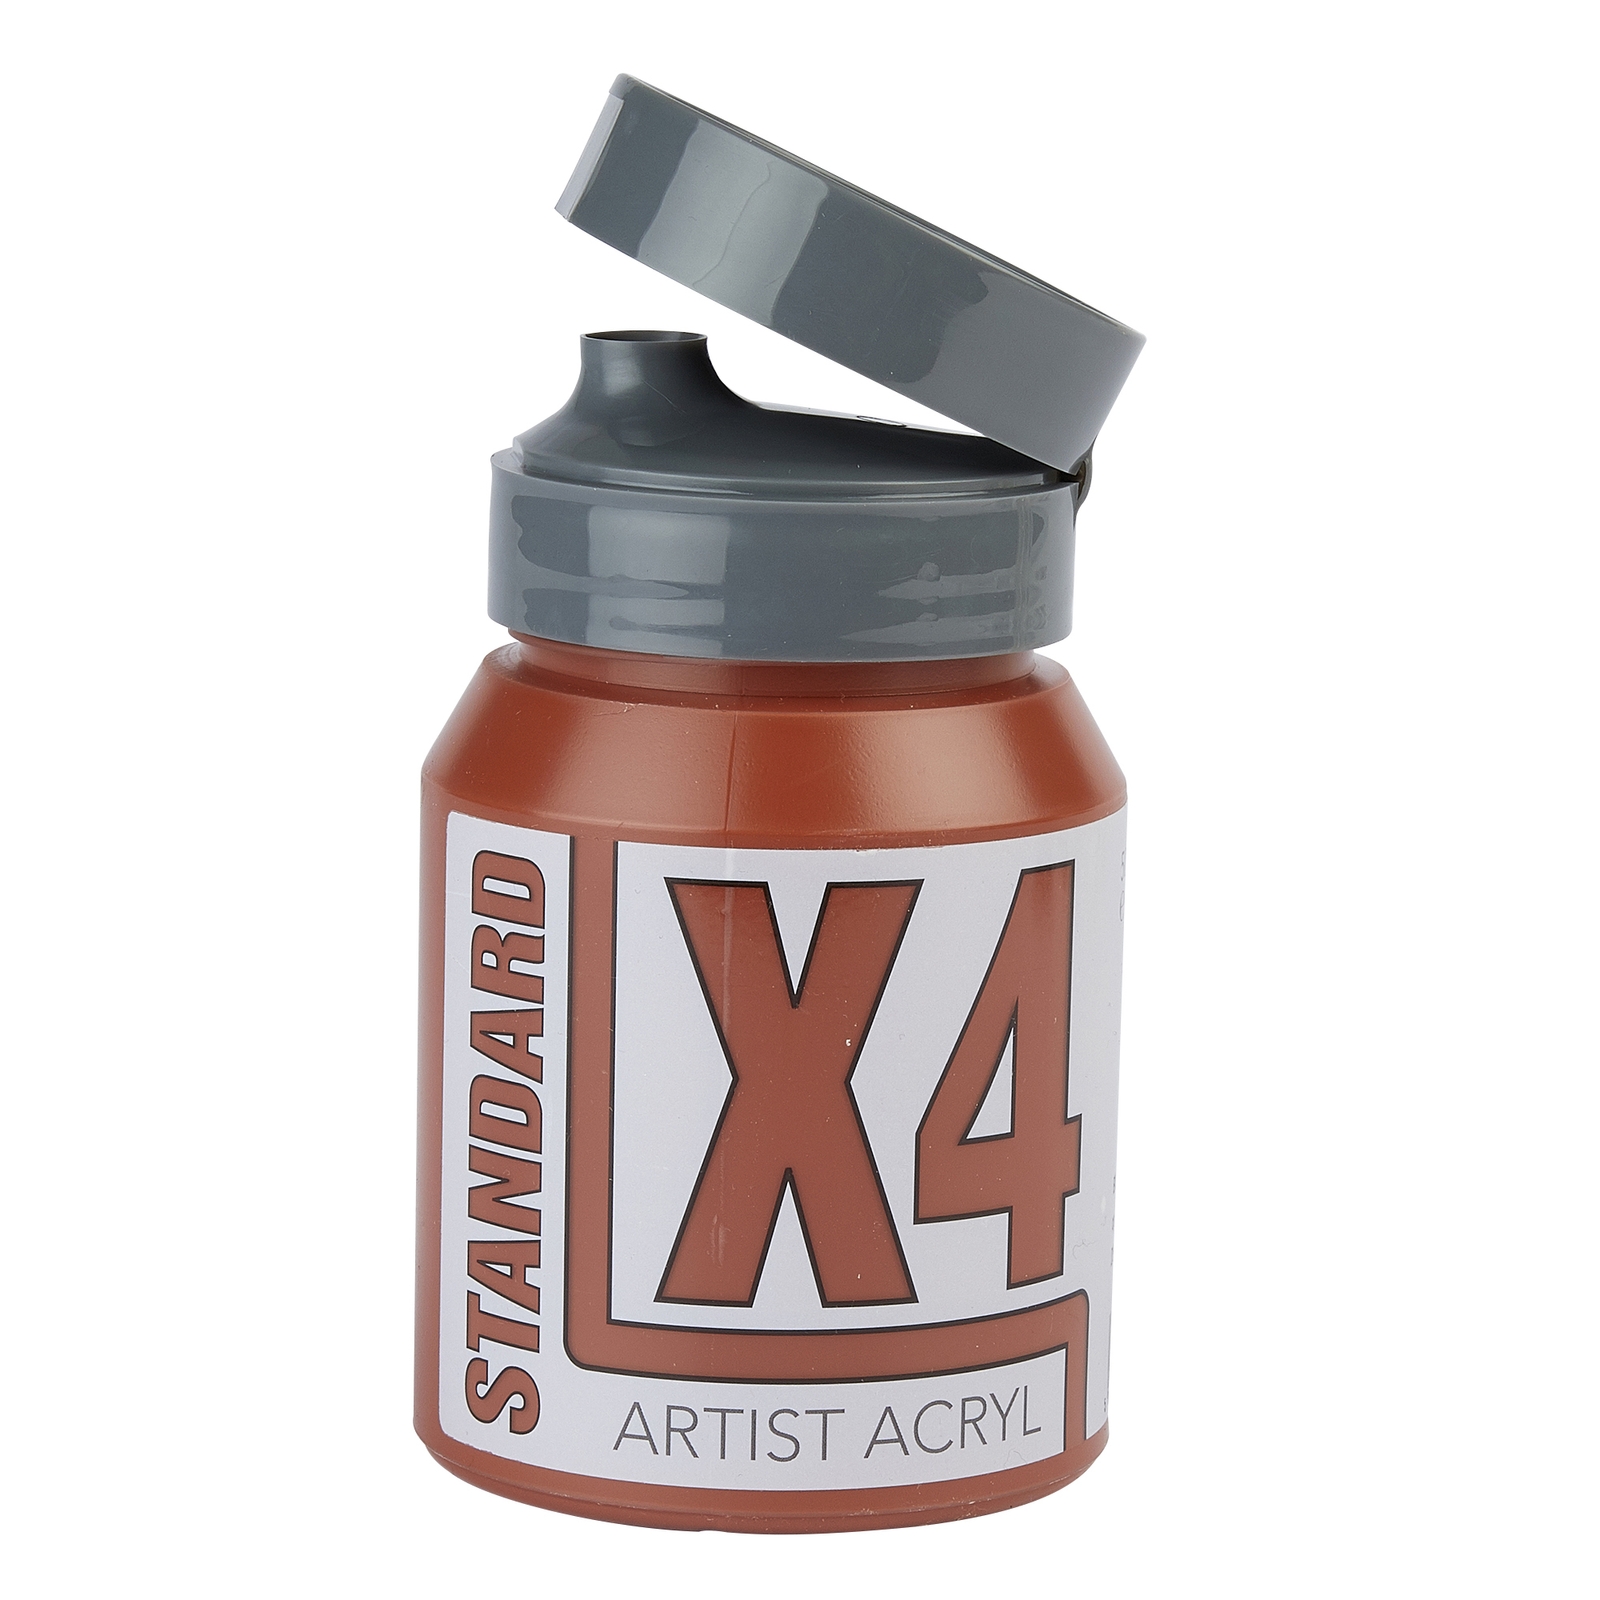 Specialist Crafts X4 Standard Burnt Sienna Acryl/Acrylic Paint - 500ml - Each